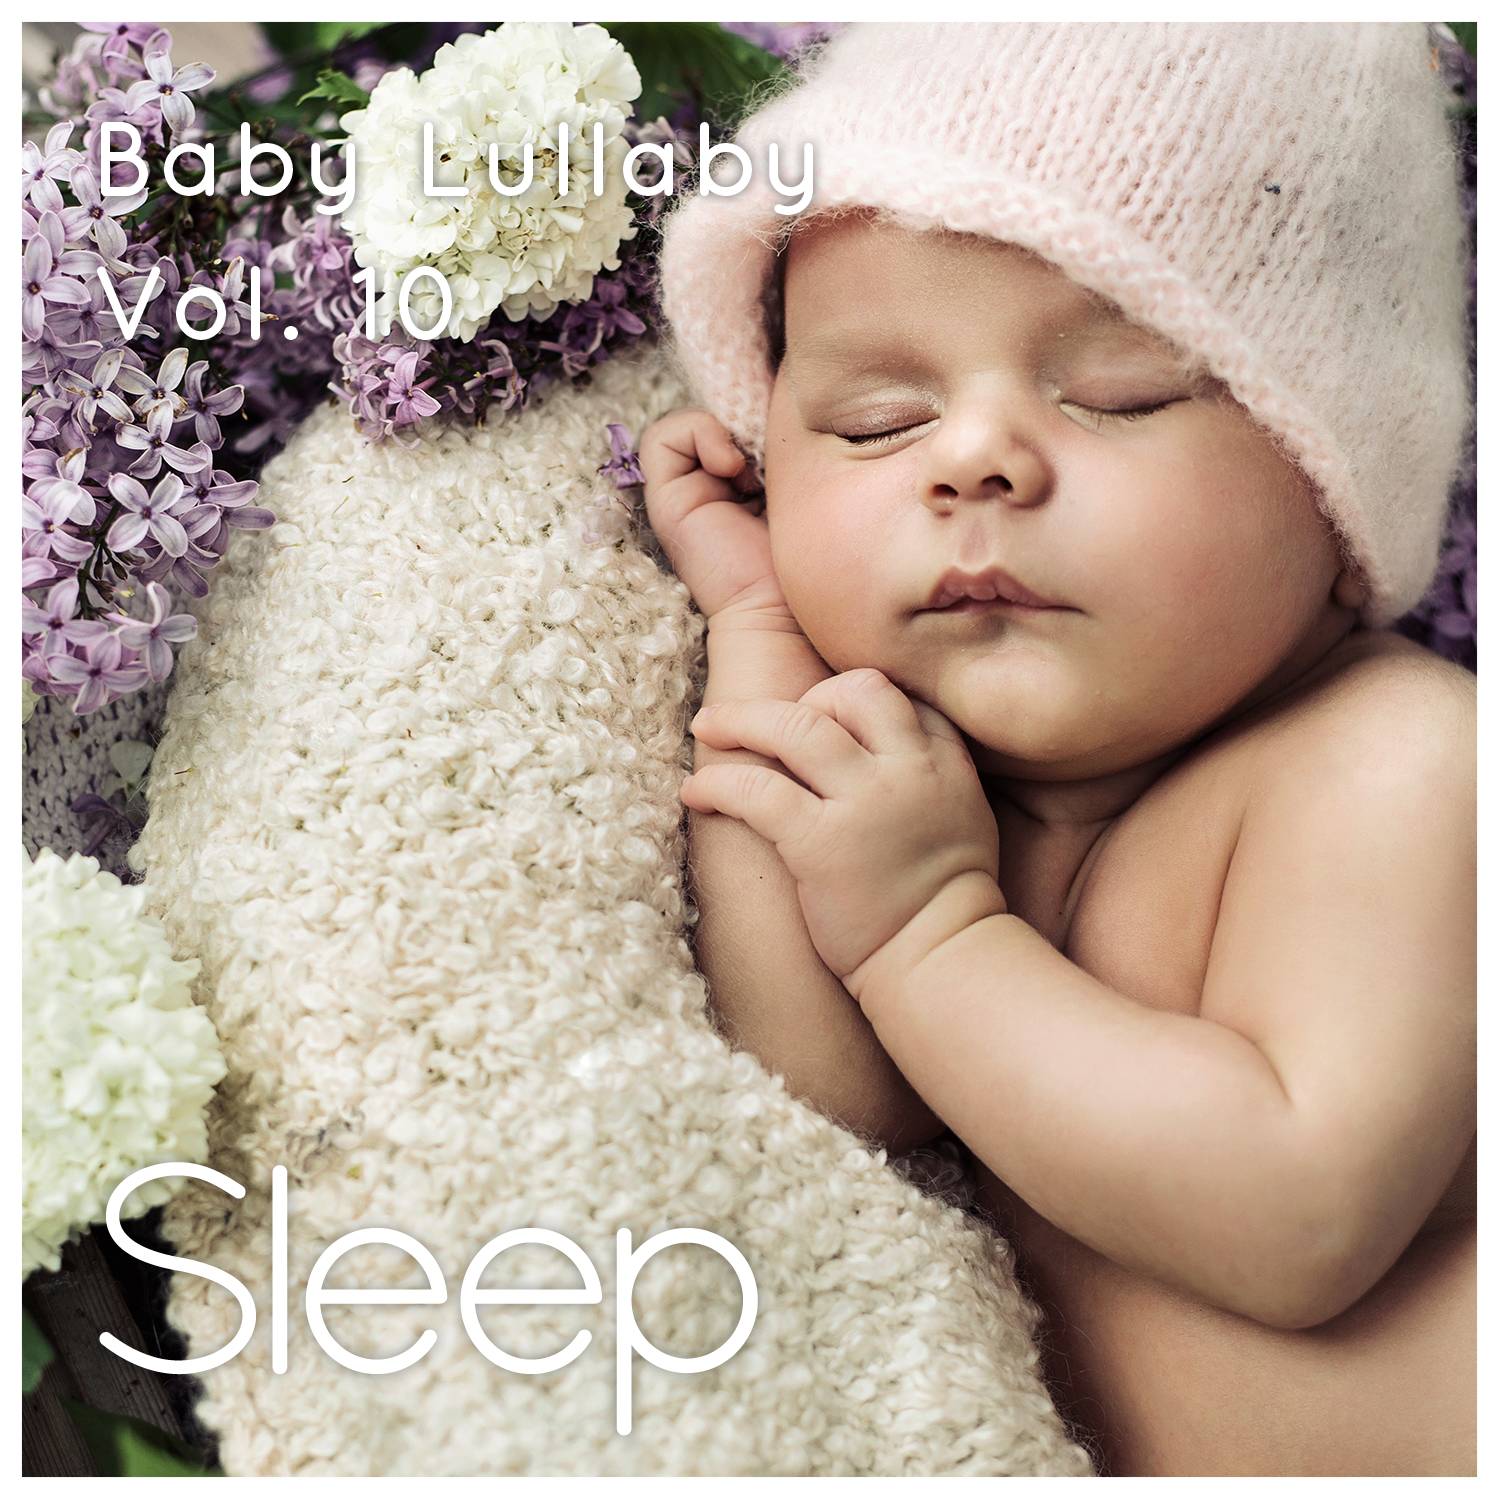 Baby Sleep - The Tumble Dryer Lullaby, Vol. 10